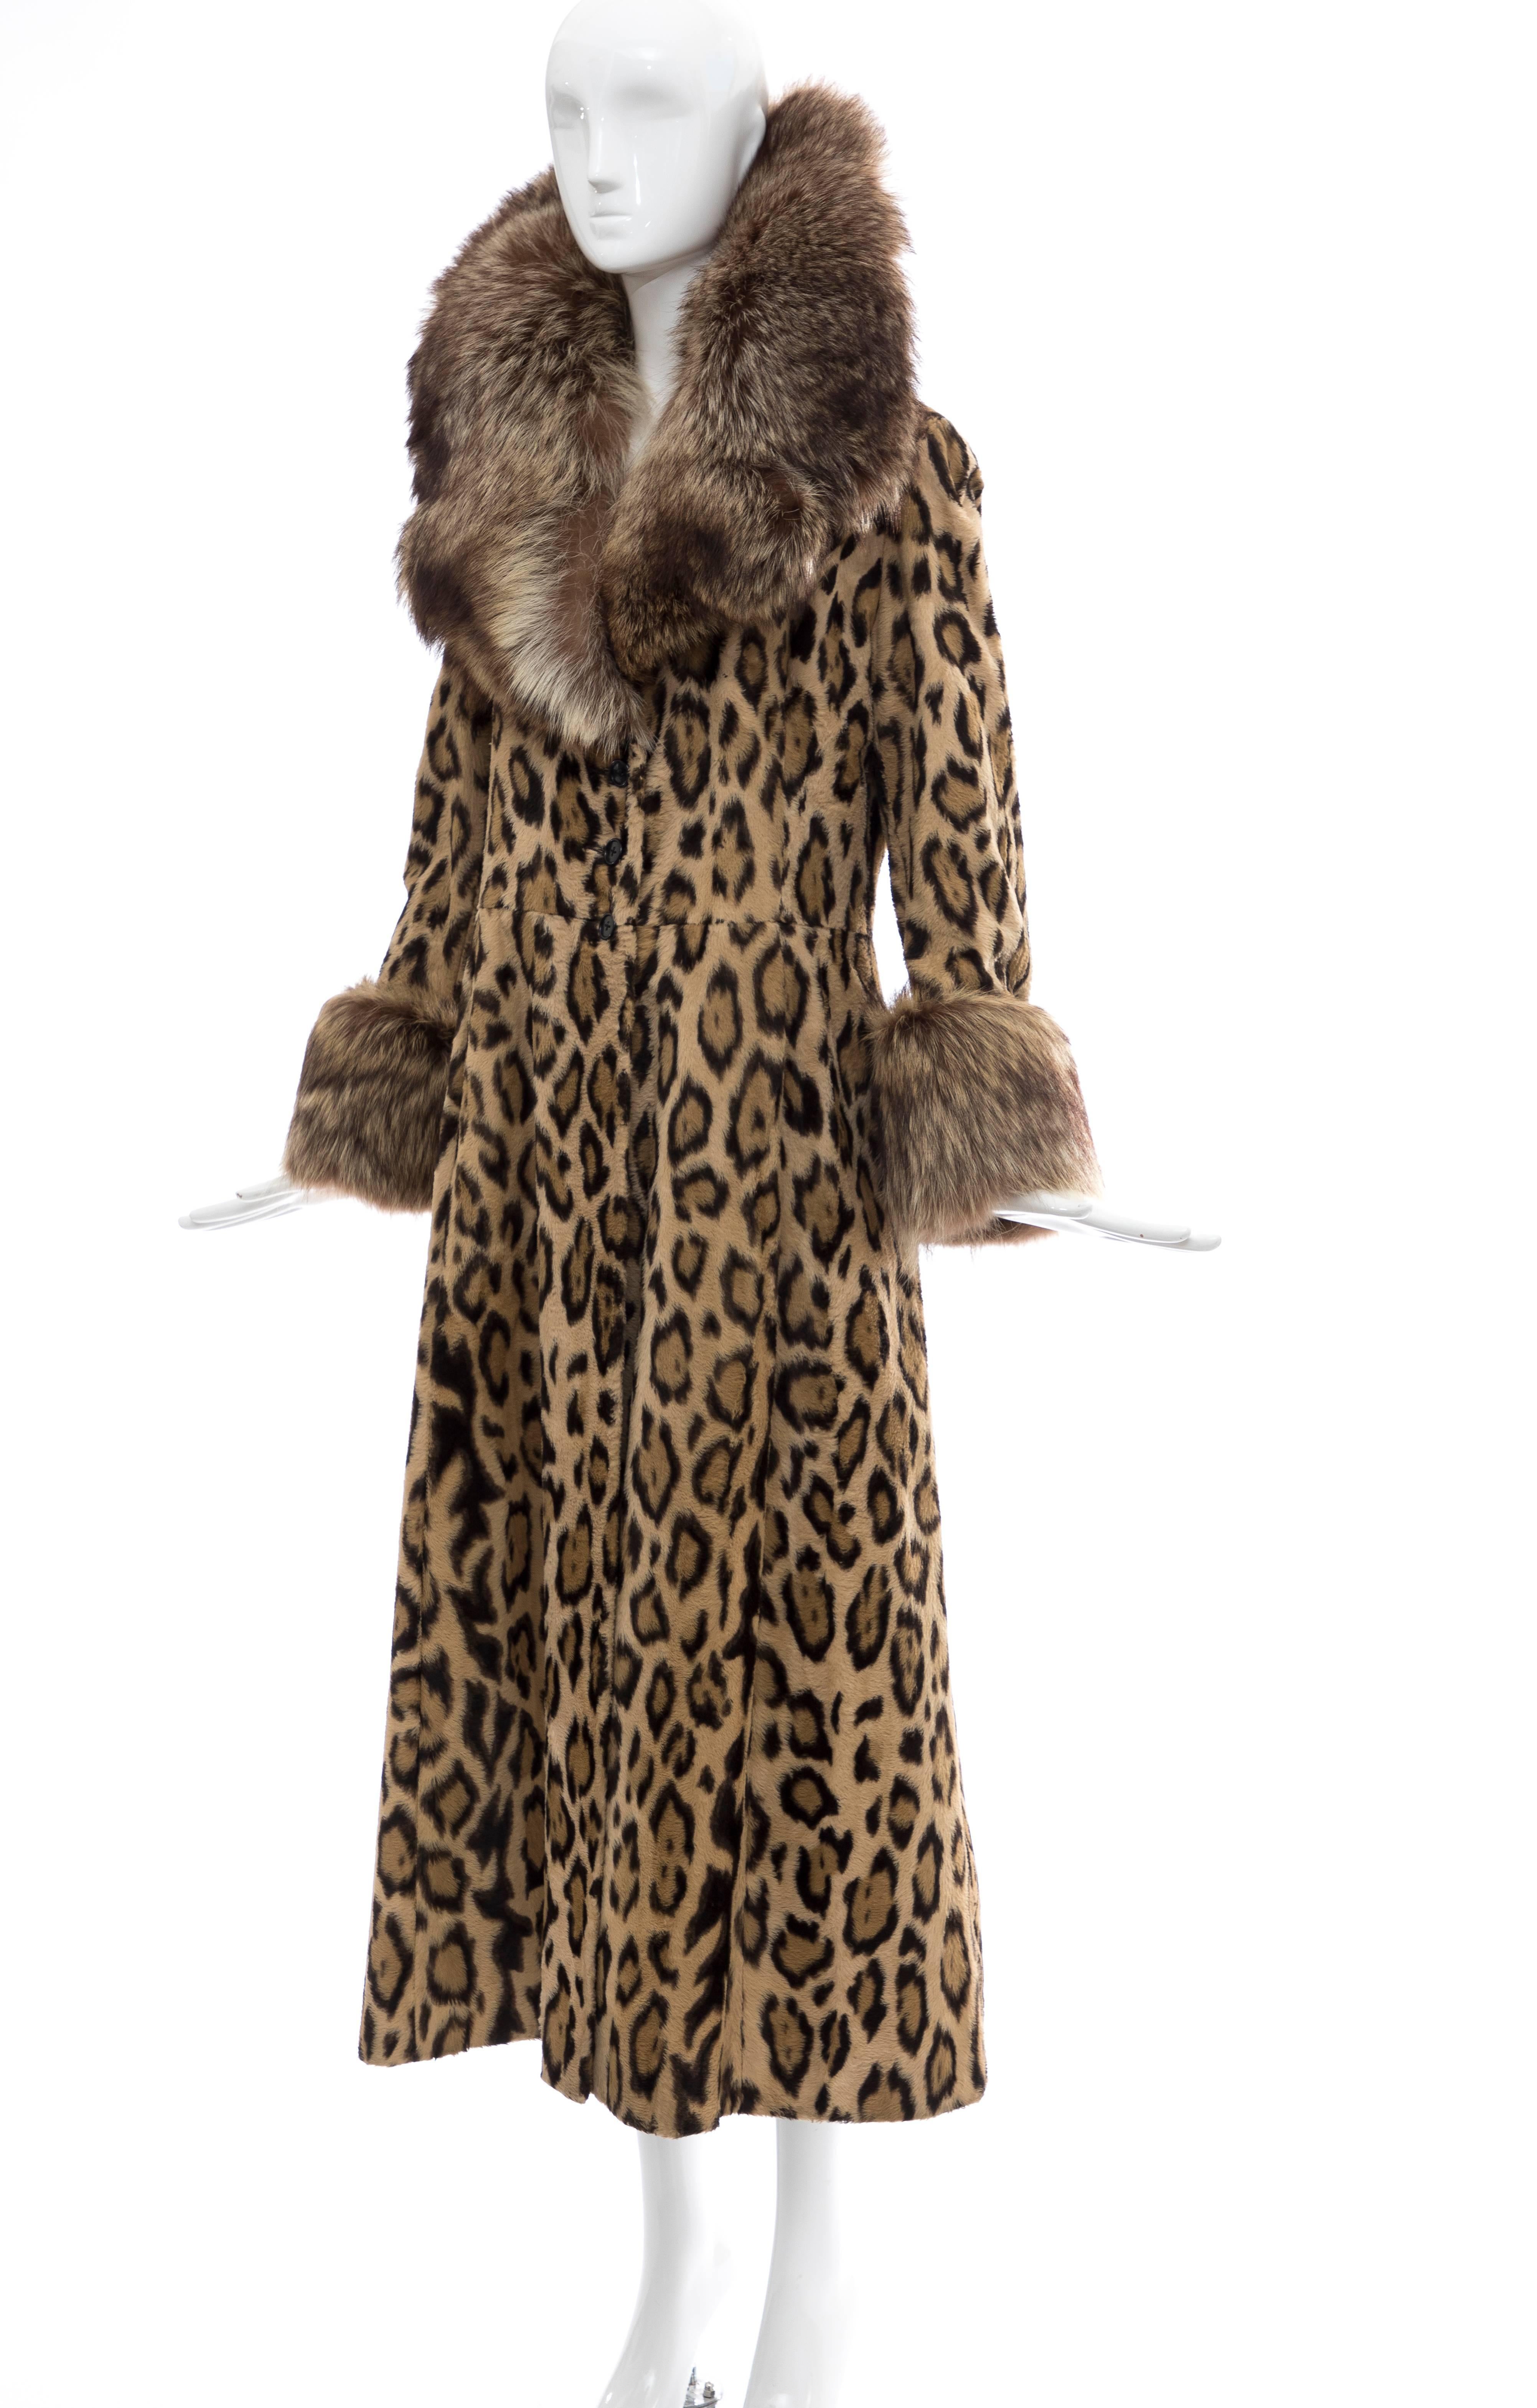 Goldring's Couture Faux Leopard Coat Dramatic Fur Collar & Cuffs, Circa: 1970's 1